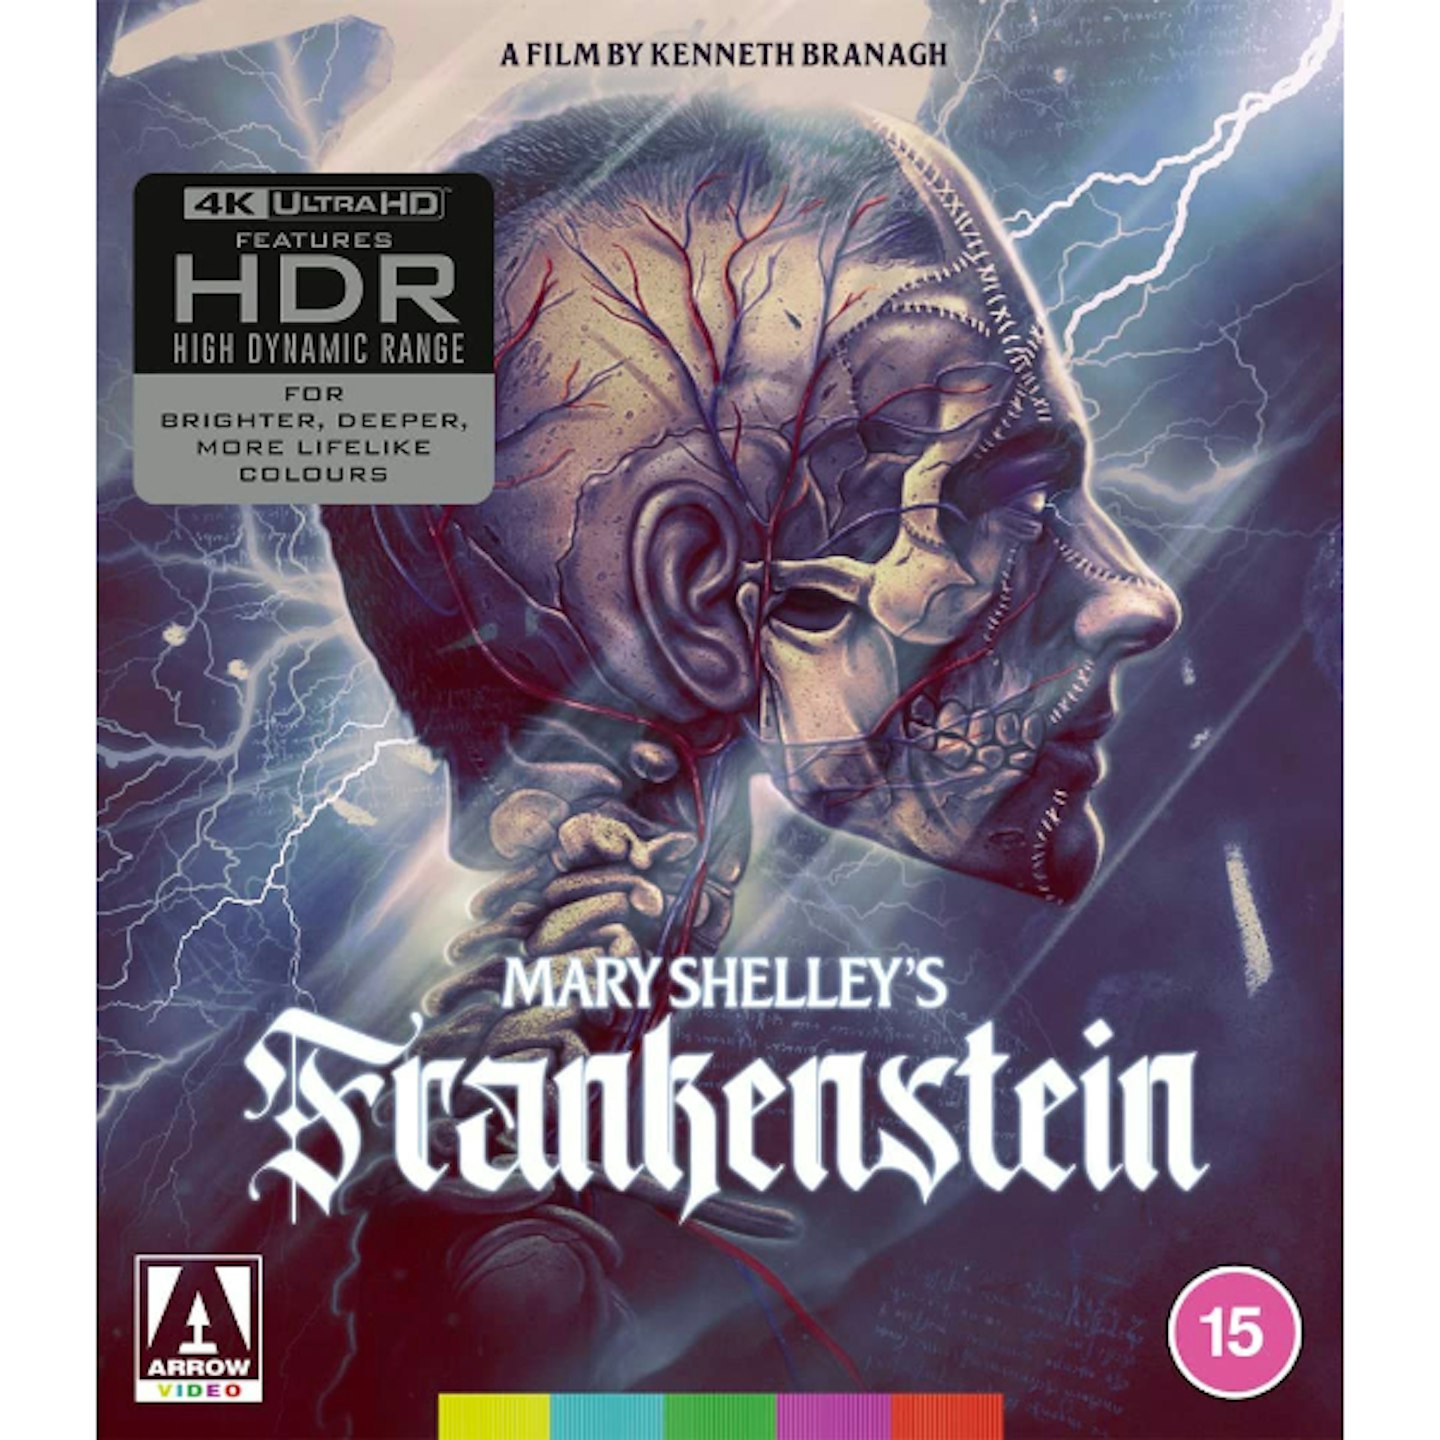 Mary Shelleyu2019s Frankenstein (Arrow Video)